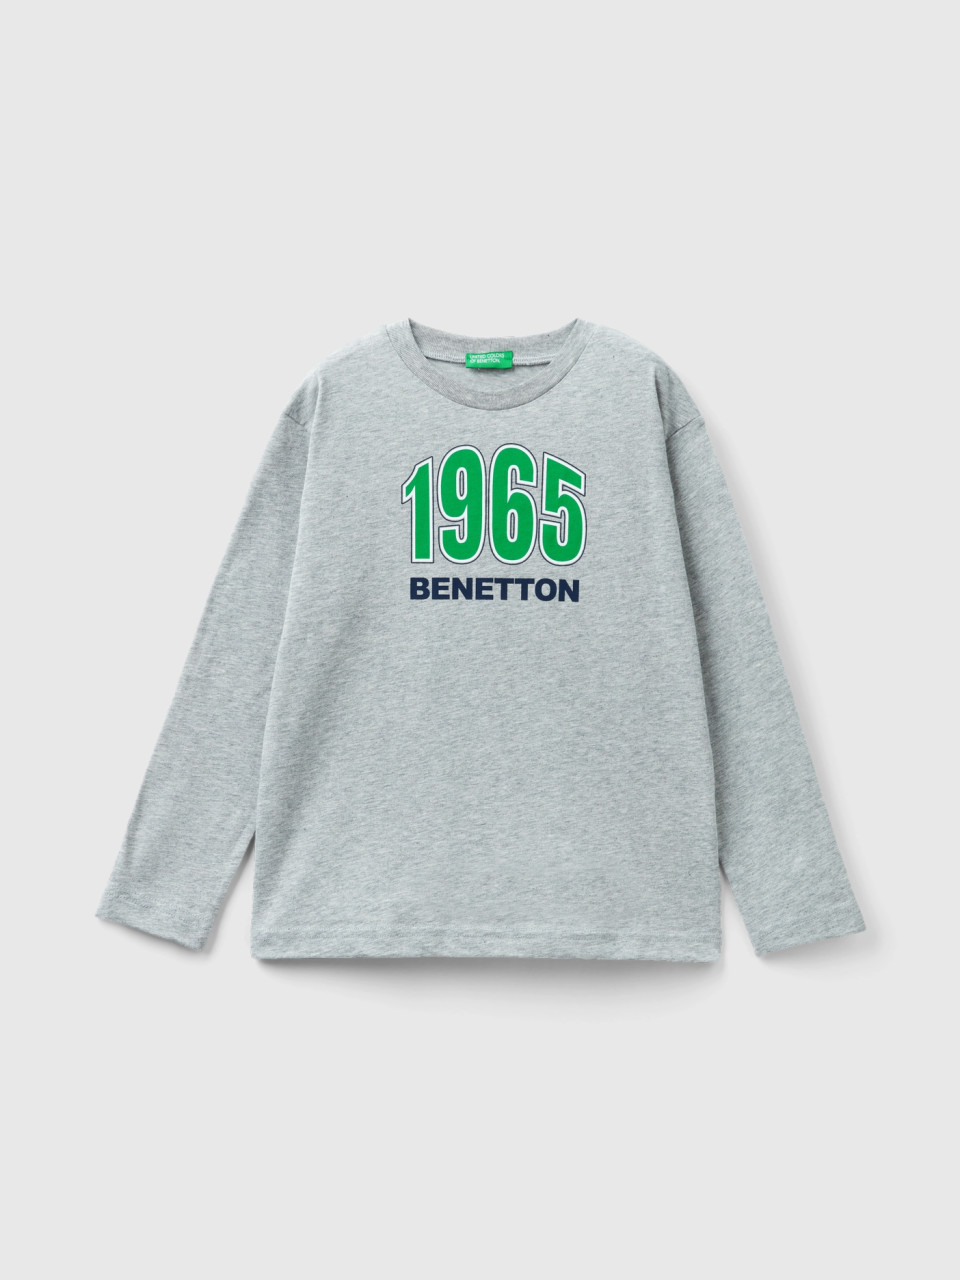 Benetton, Camiseta De Manga Larga De Algodón Orgánico, Gris Claro, Niños